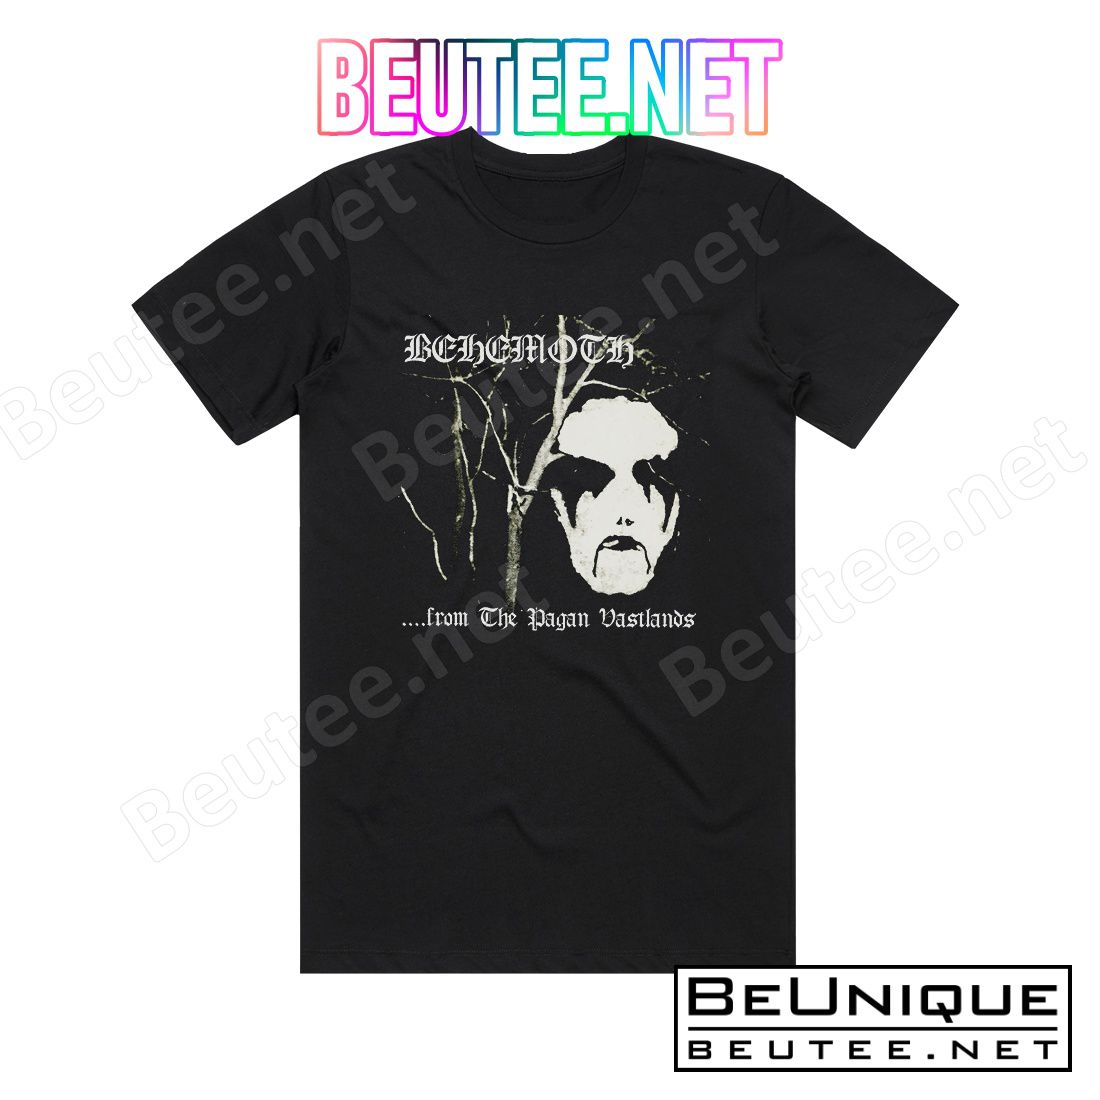 Behemoth From The Pagan Vastlands 1 Album Cover T-Shirt